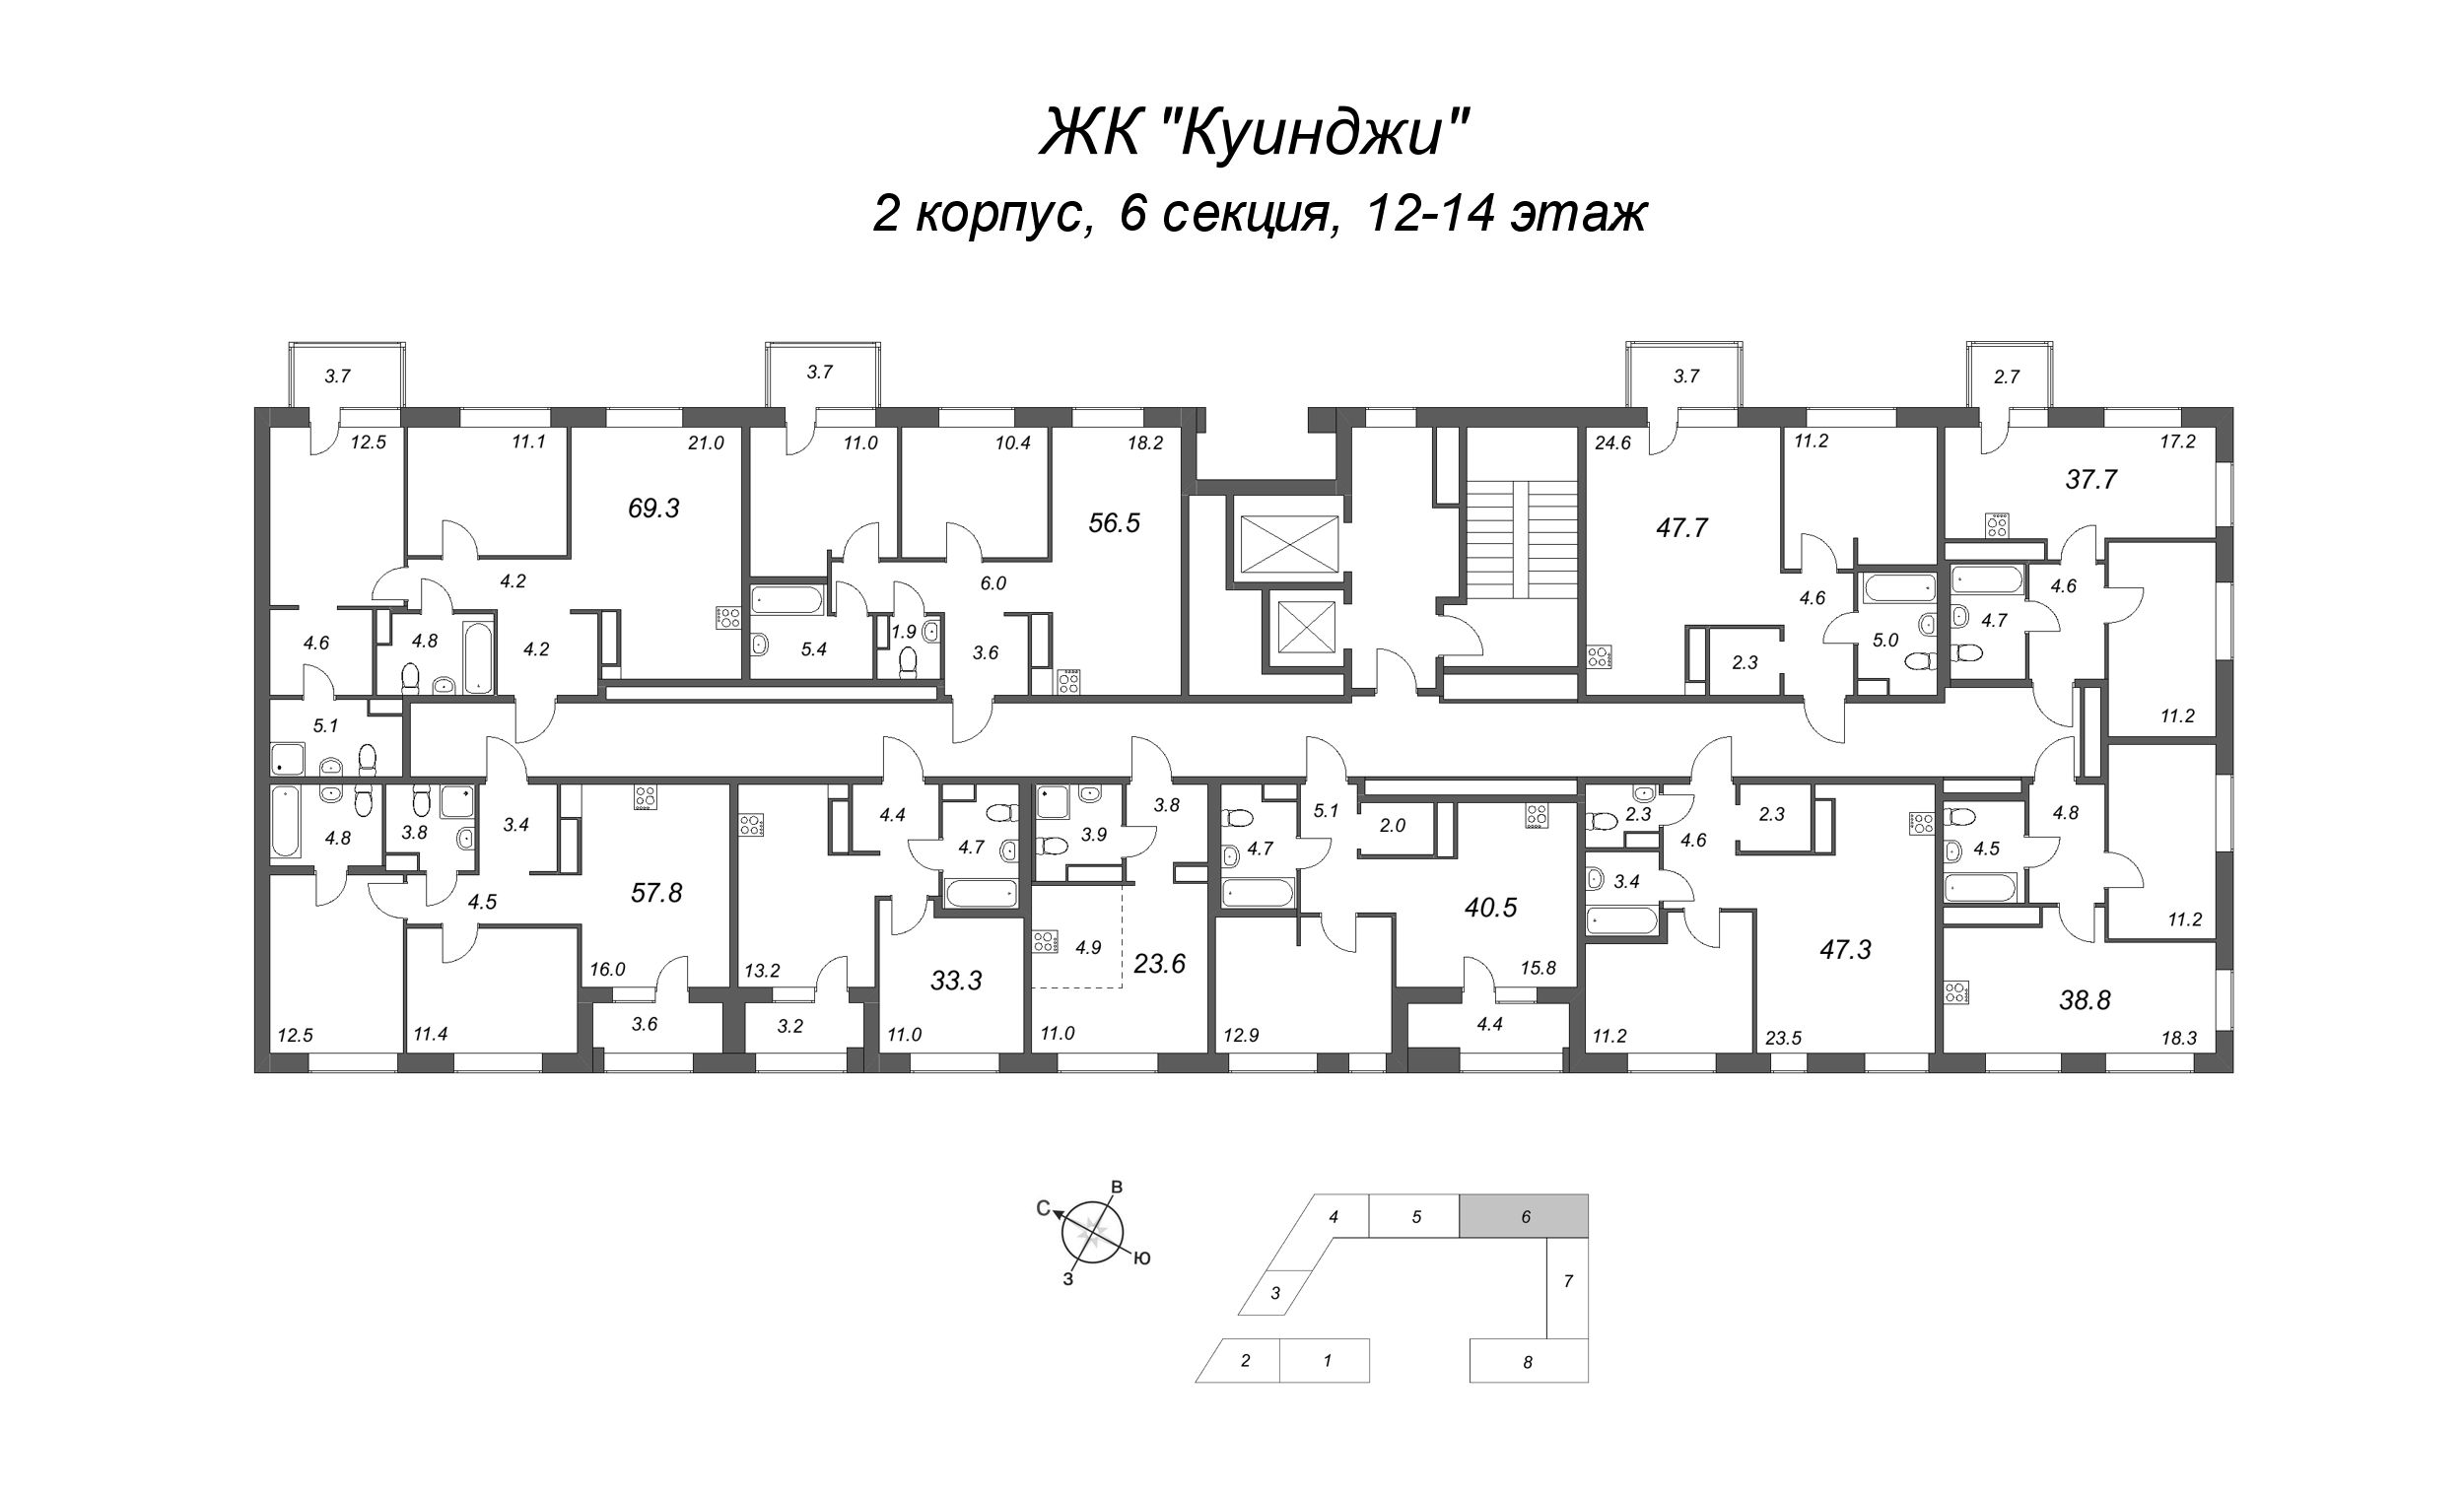 3-комнатная (Евро) квартира, 56.5 м² - планировка этажа